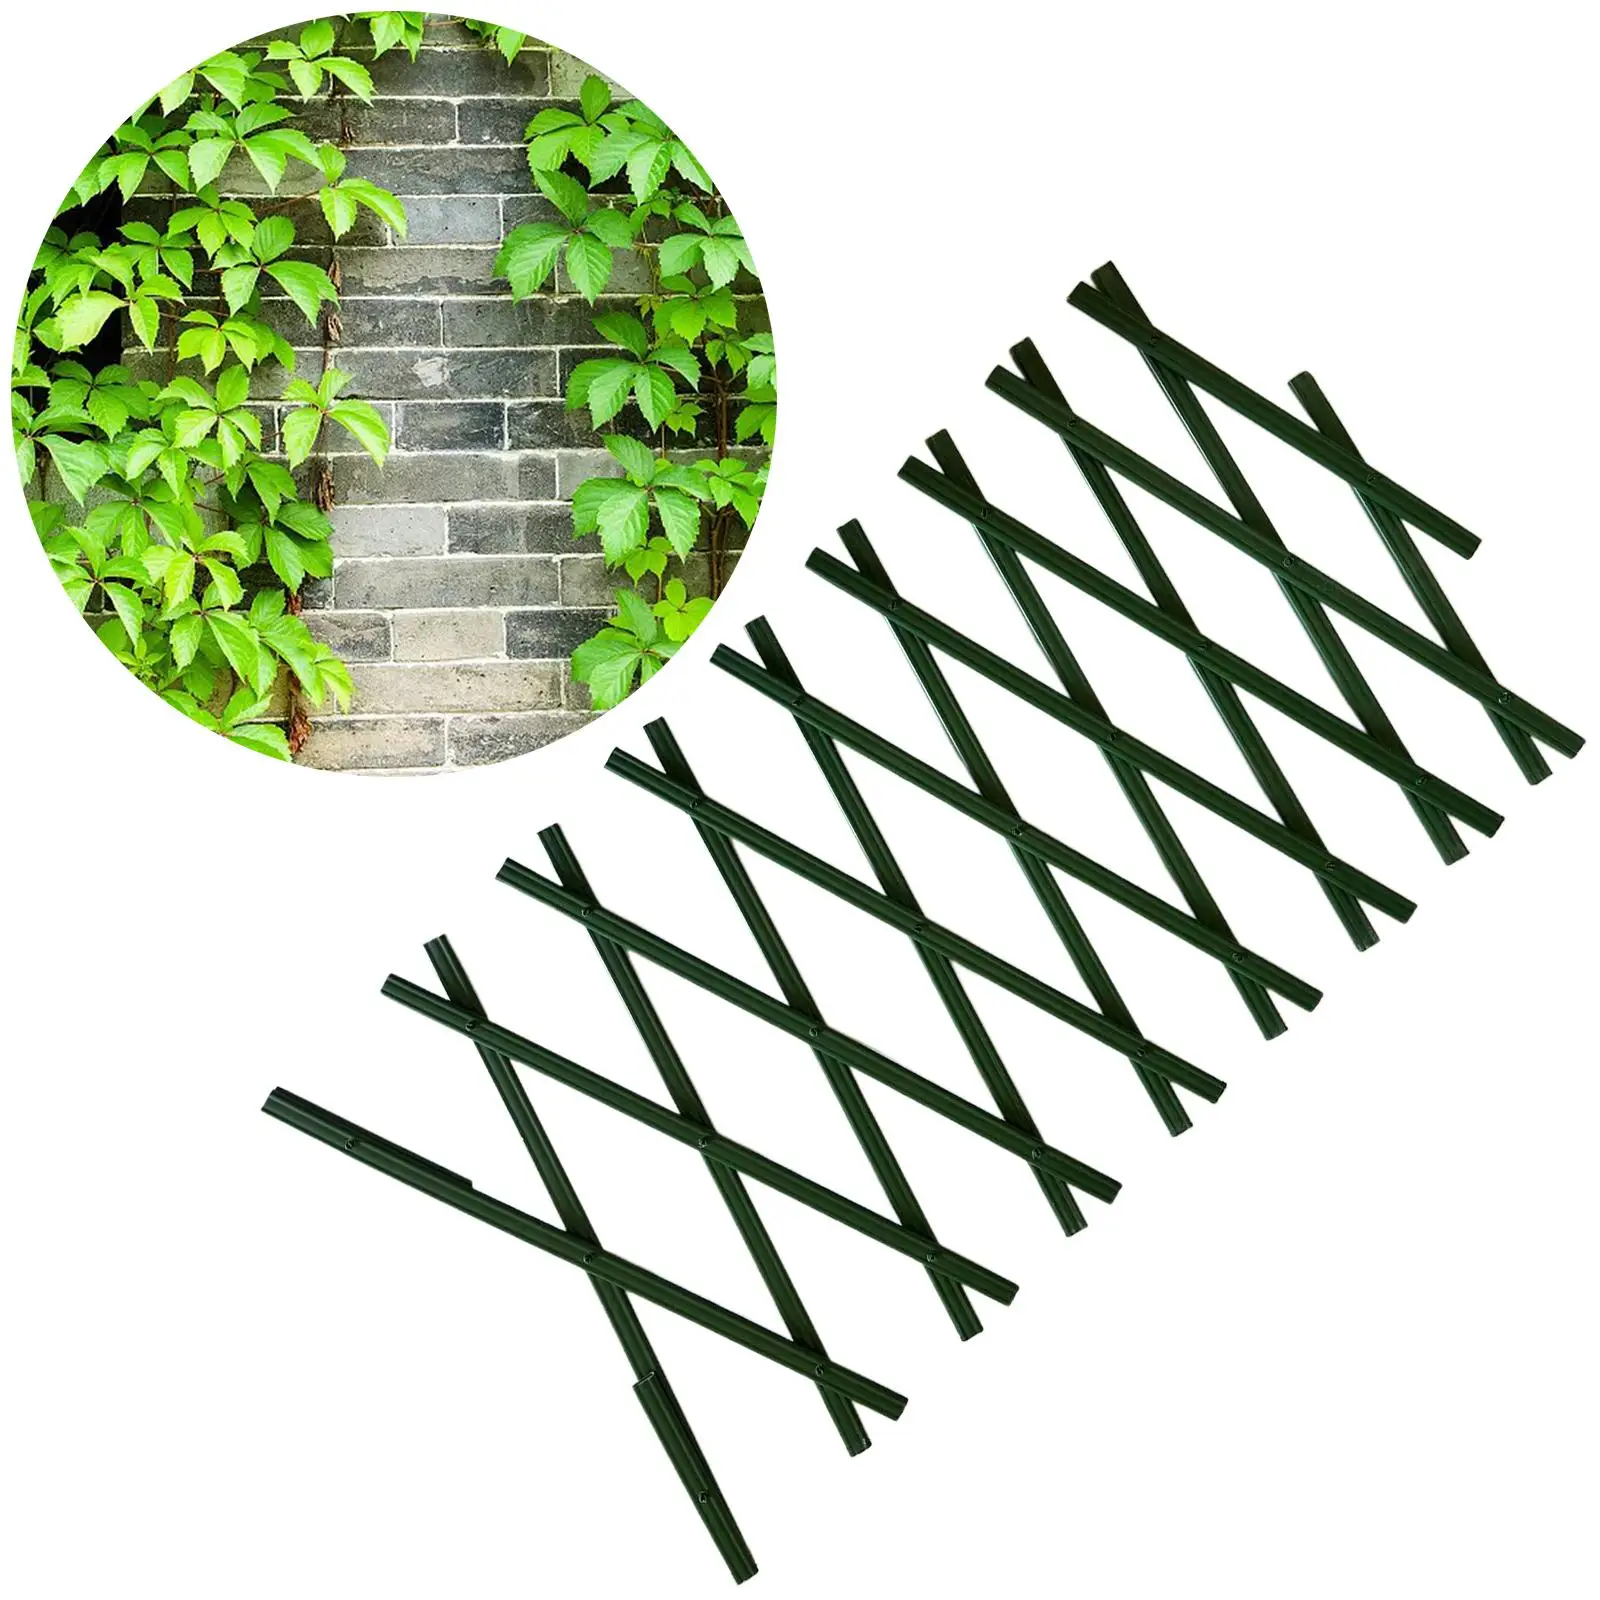 Plastic Garden Fence Retractable Climbing Plants Wall Trellis for Courtyard Lawn Decor